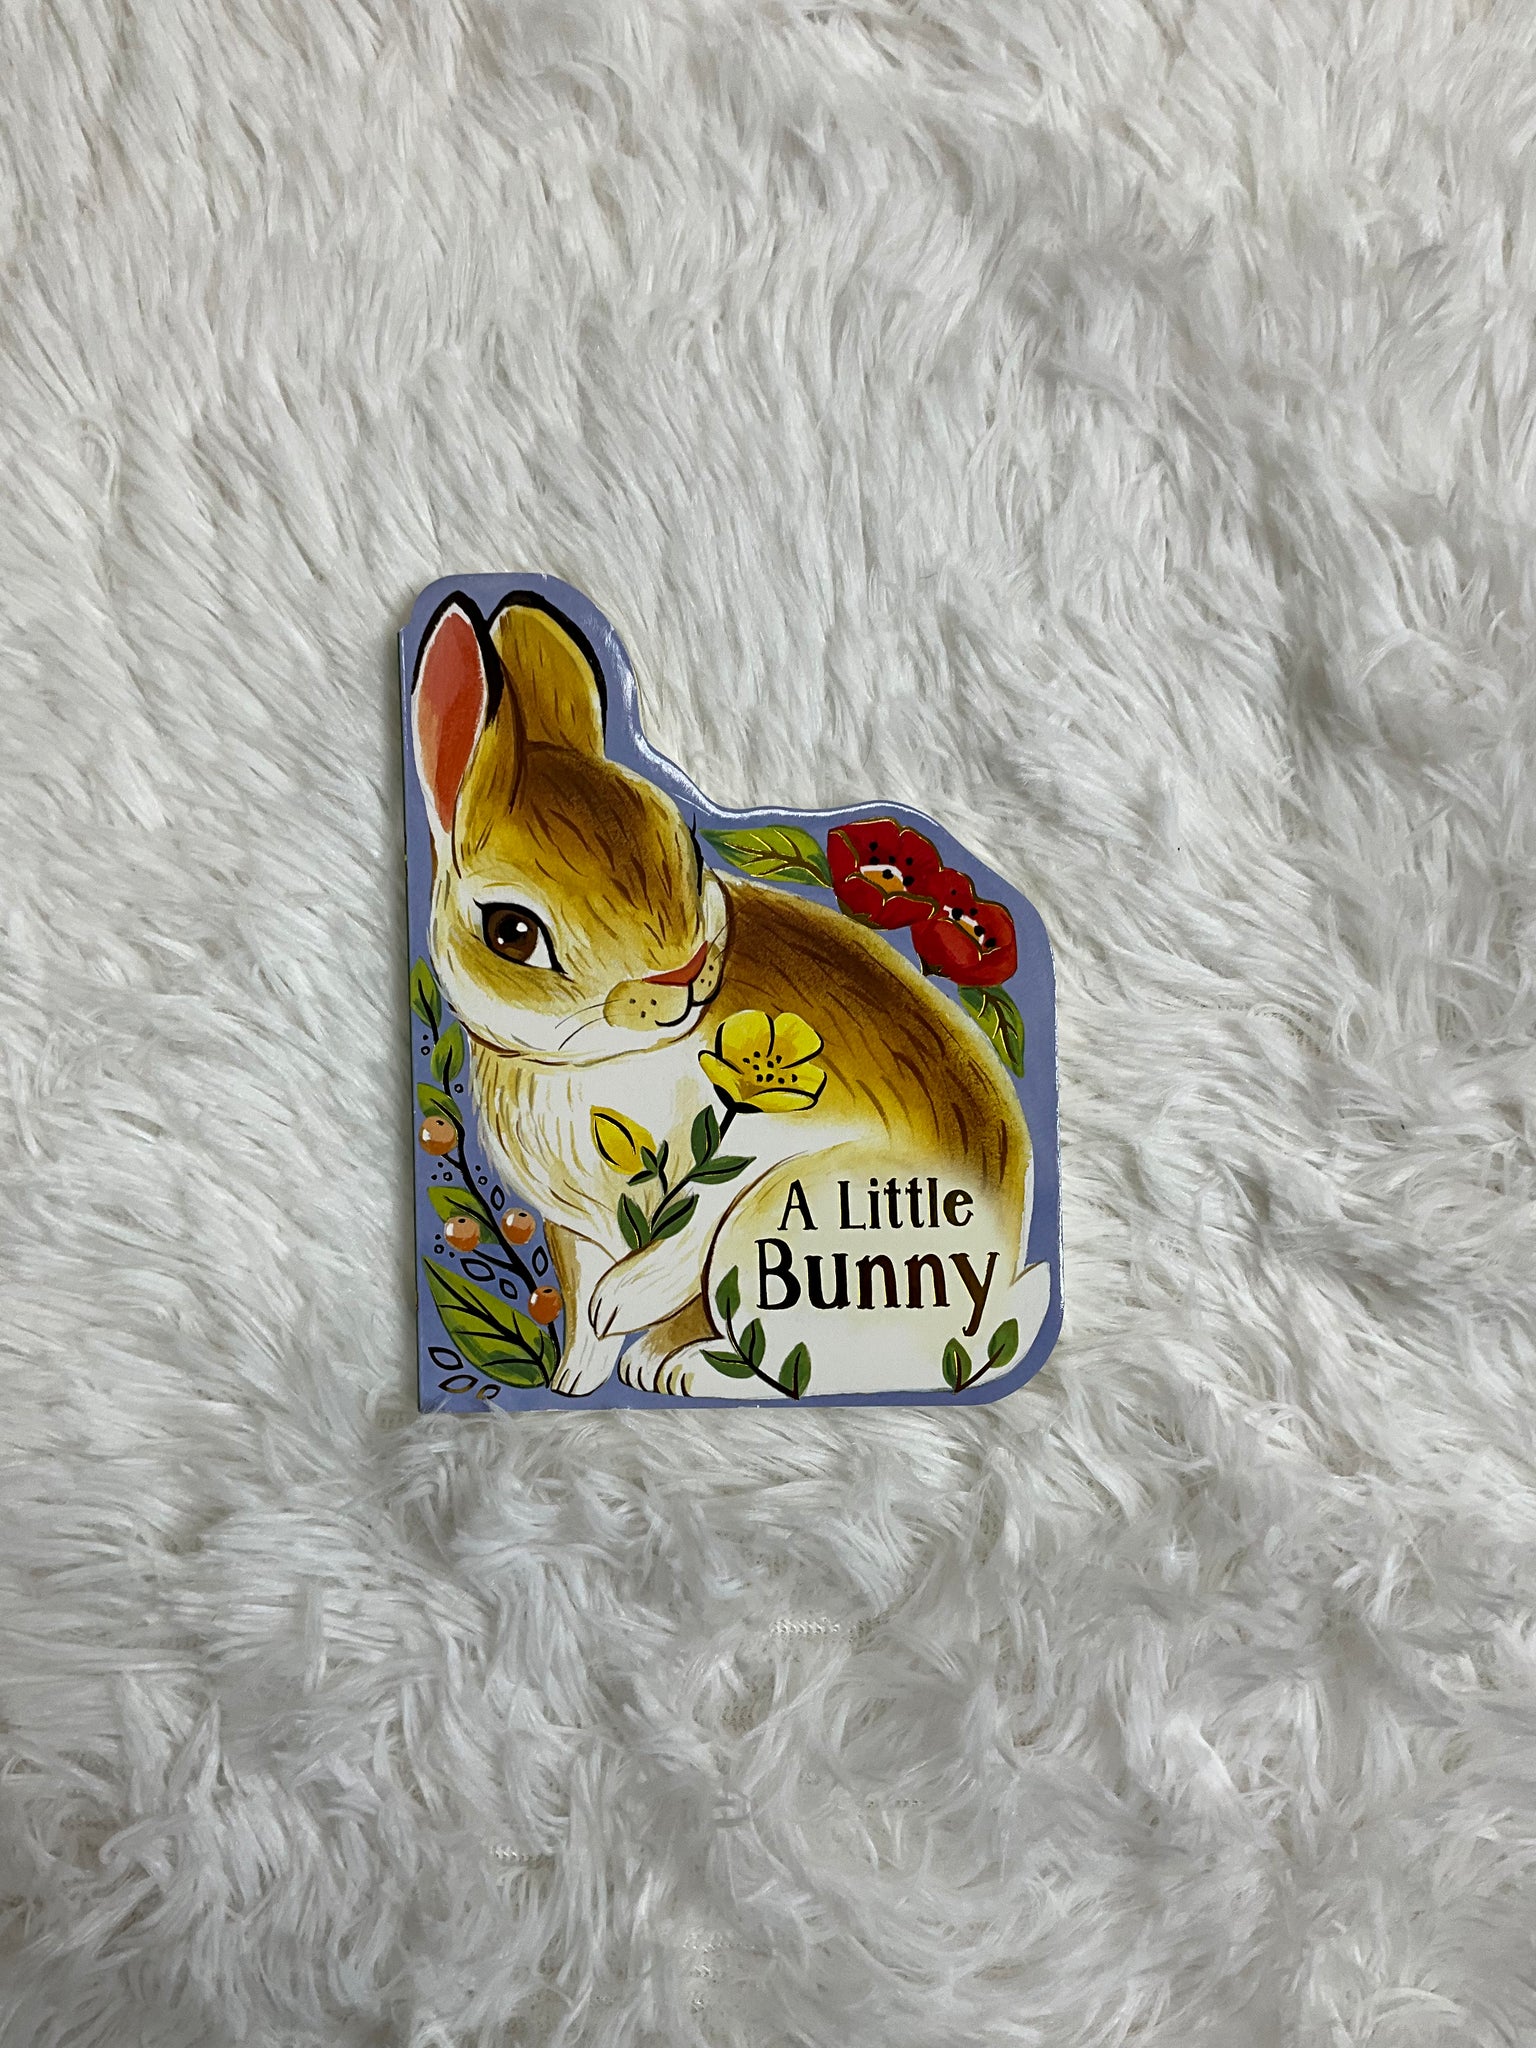 A Little Bunny. A Bunny Shaped Book